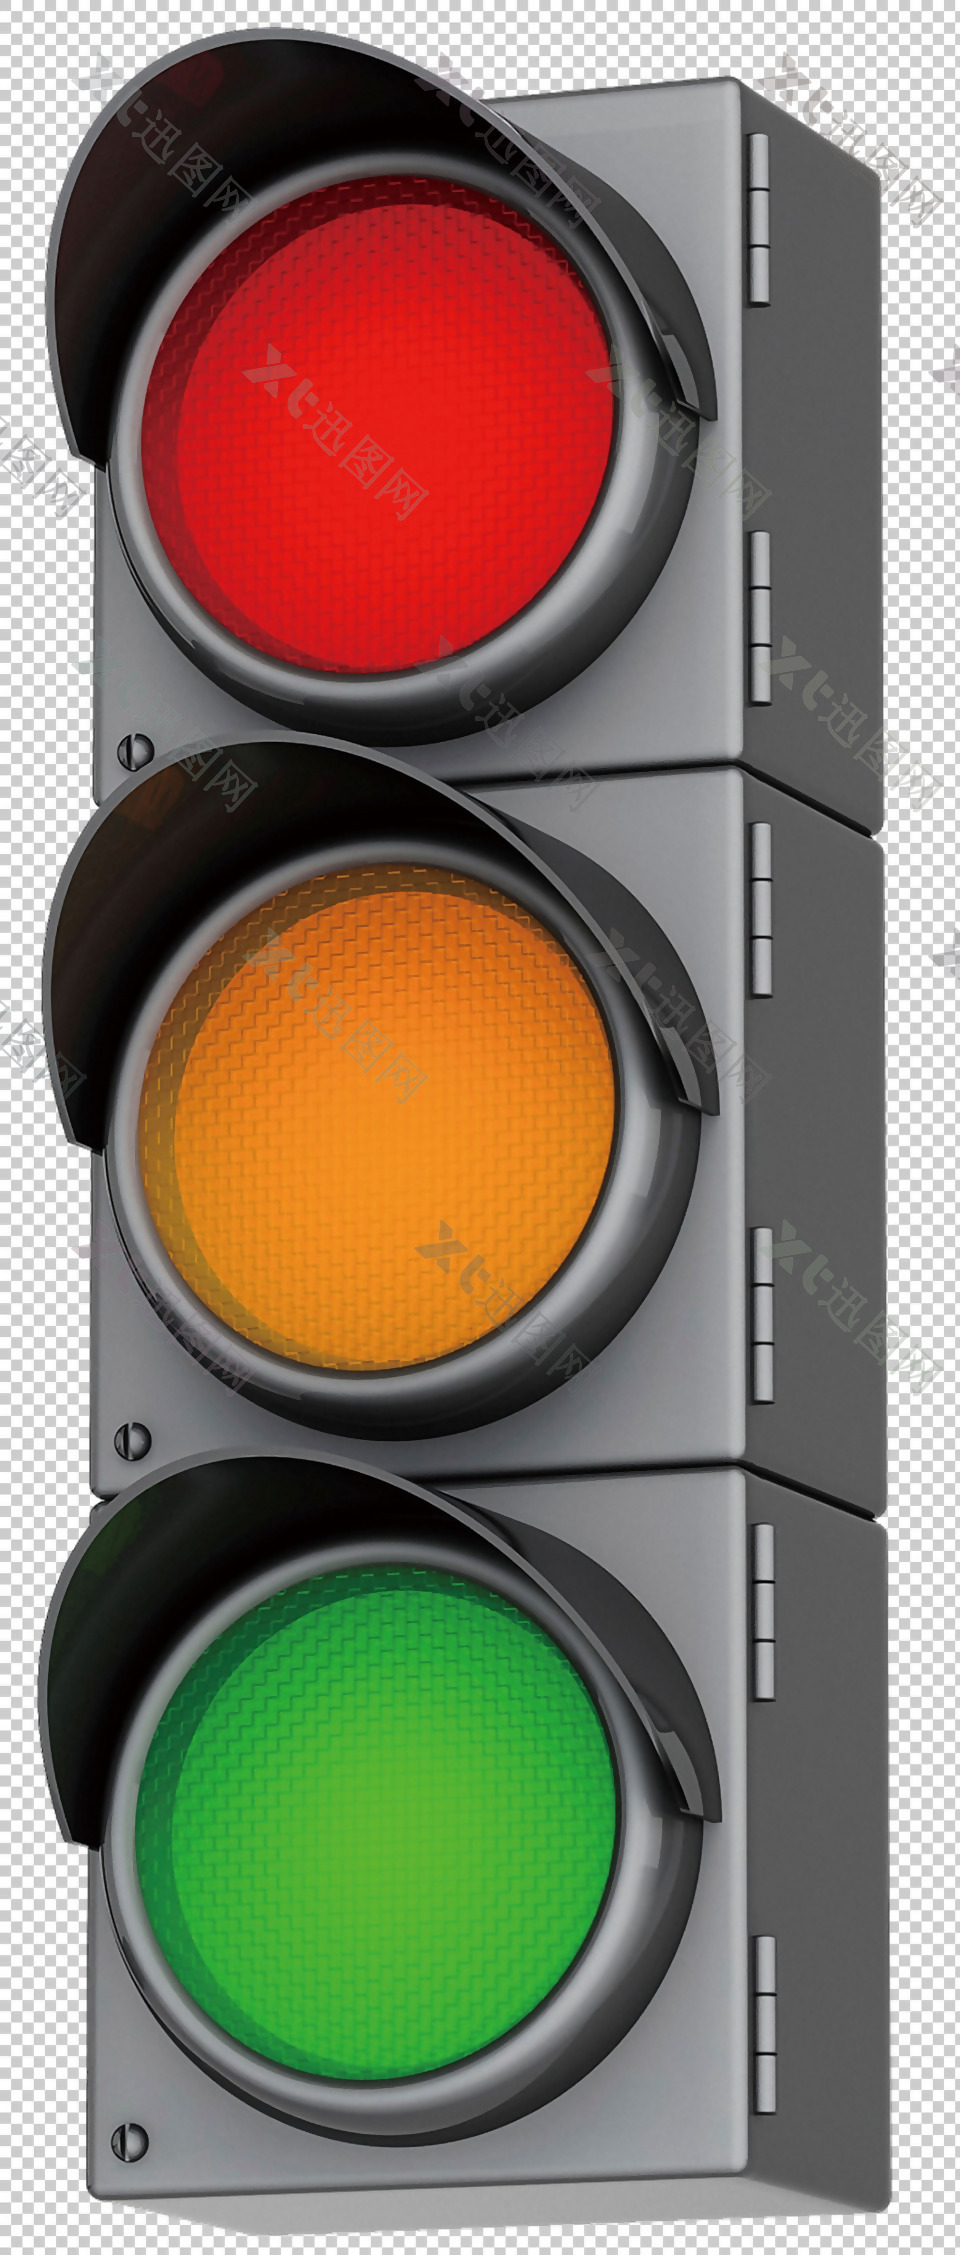 3d制作红绿灯图免抠png透明图层素材